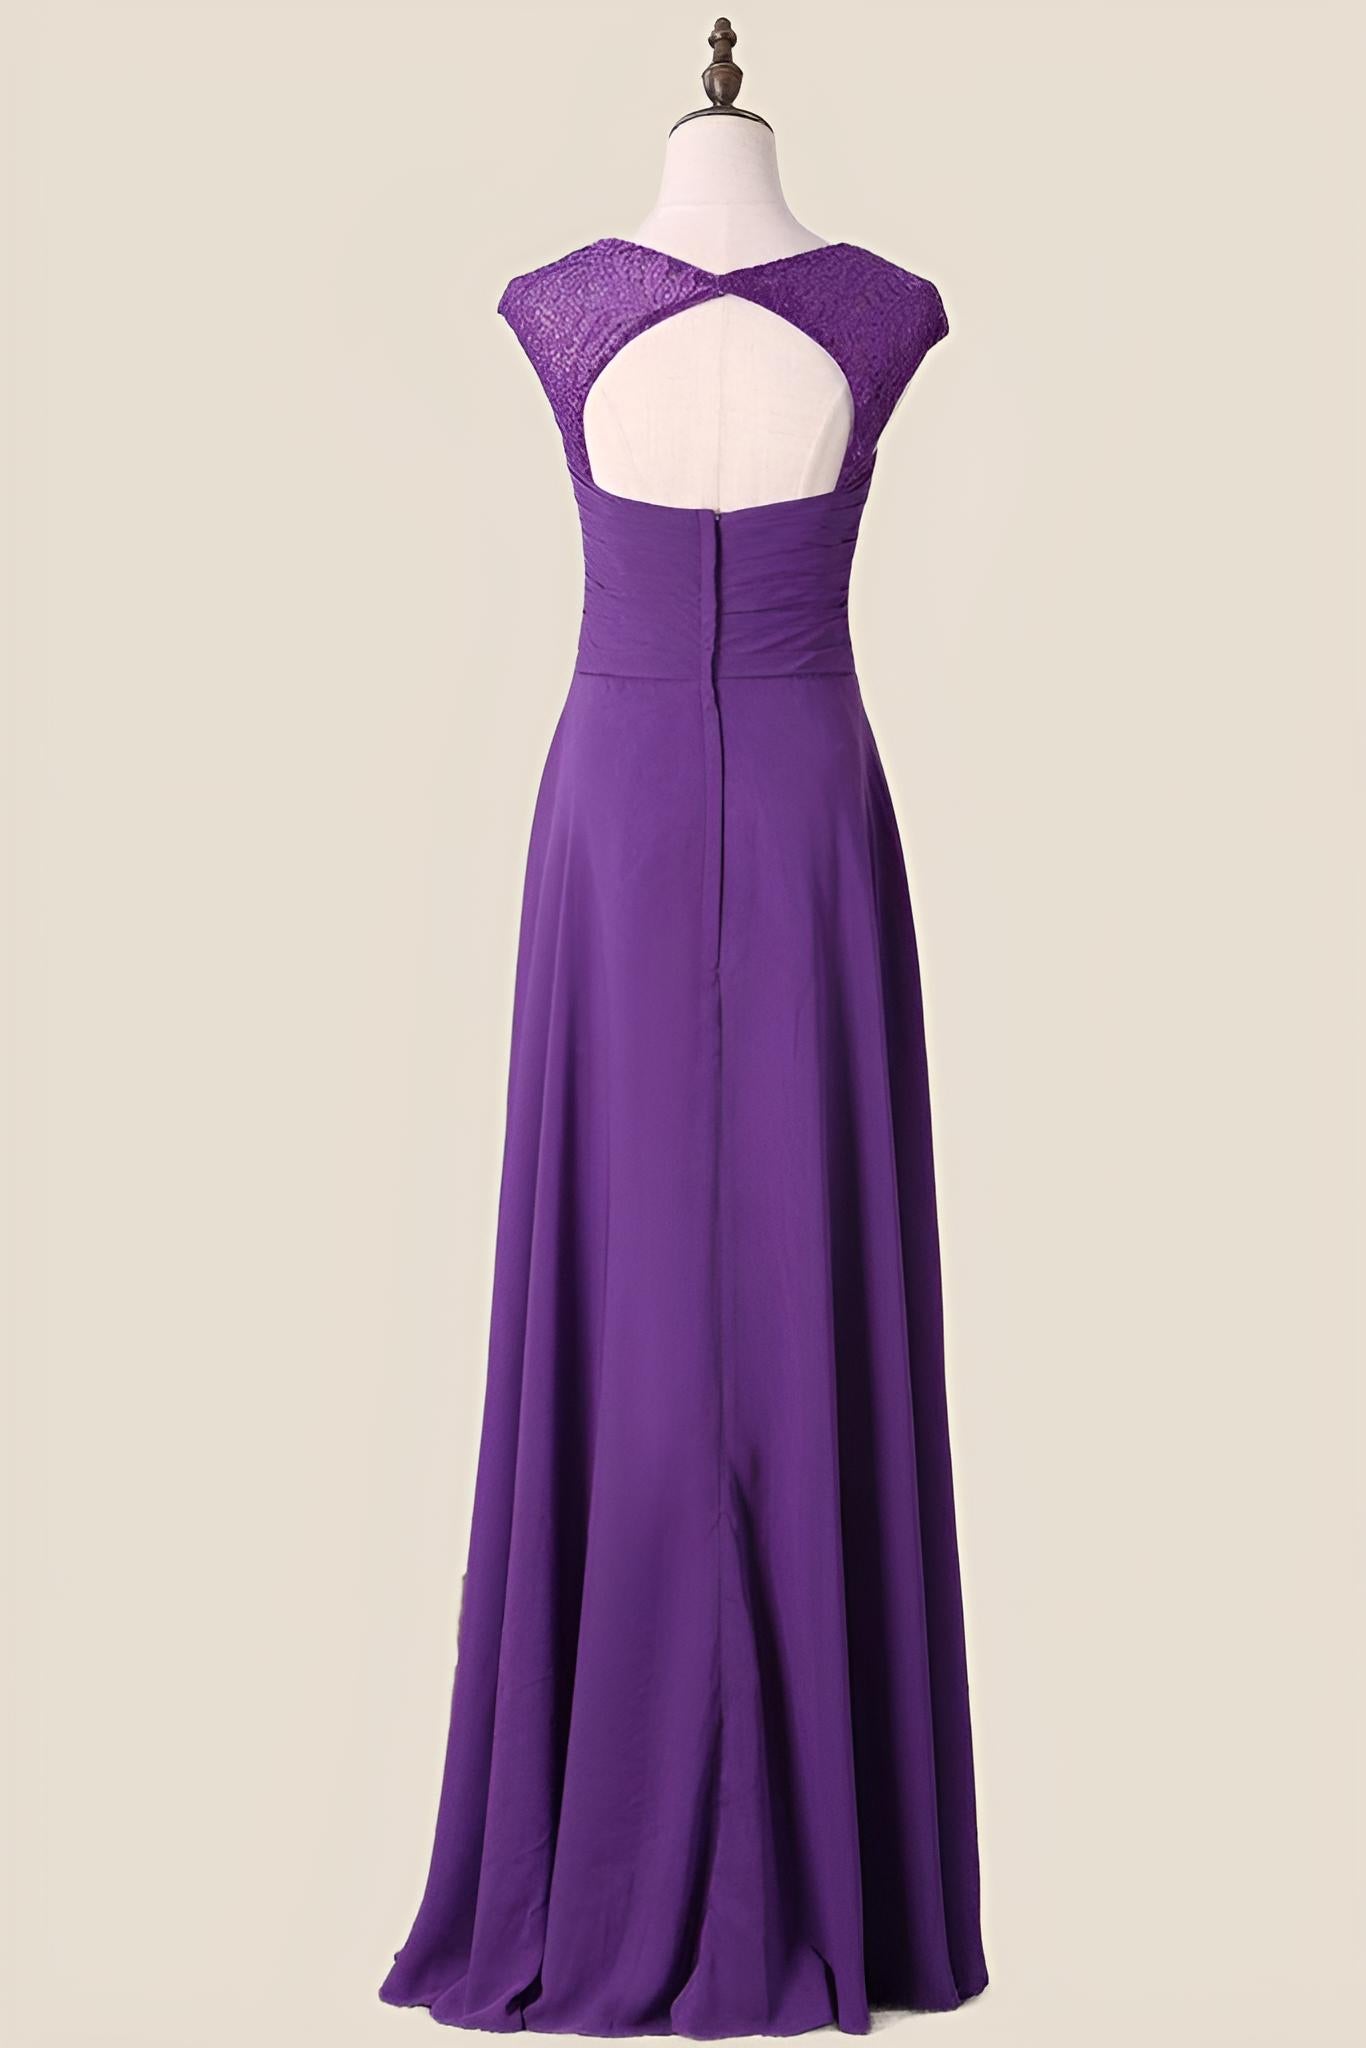 Cap Sleeves Purple Chiffon A-line Bridesmaid Dress